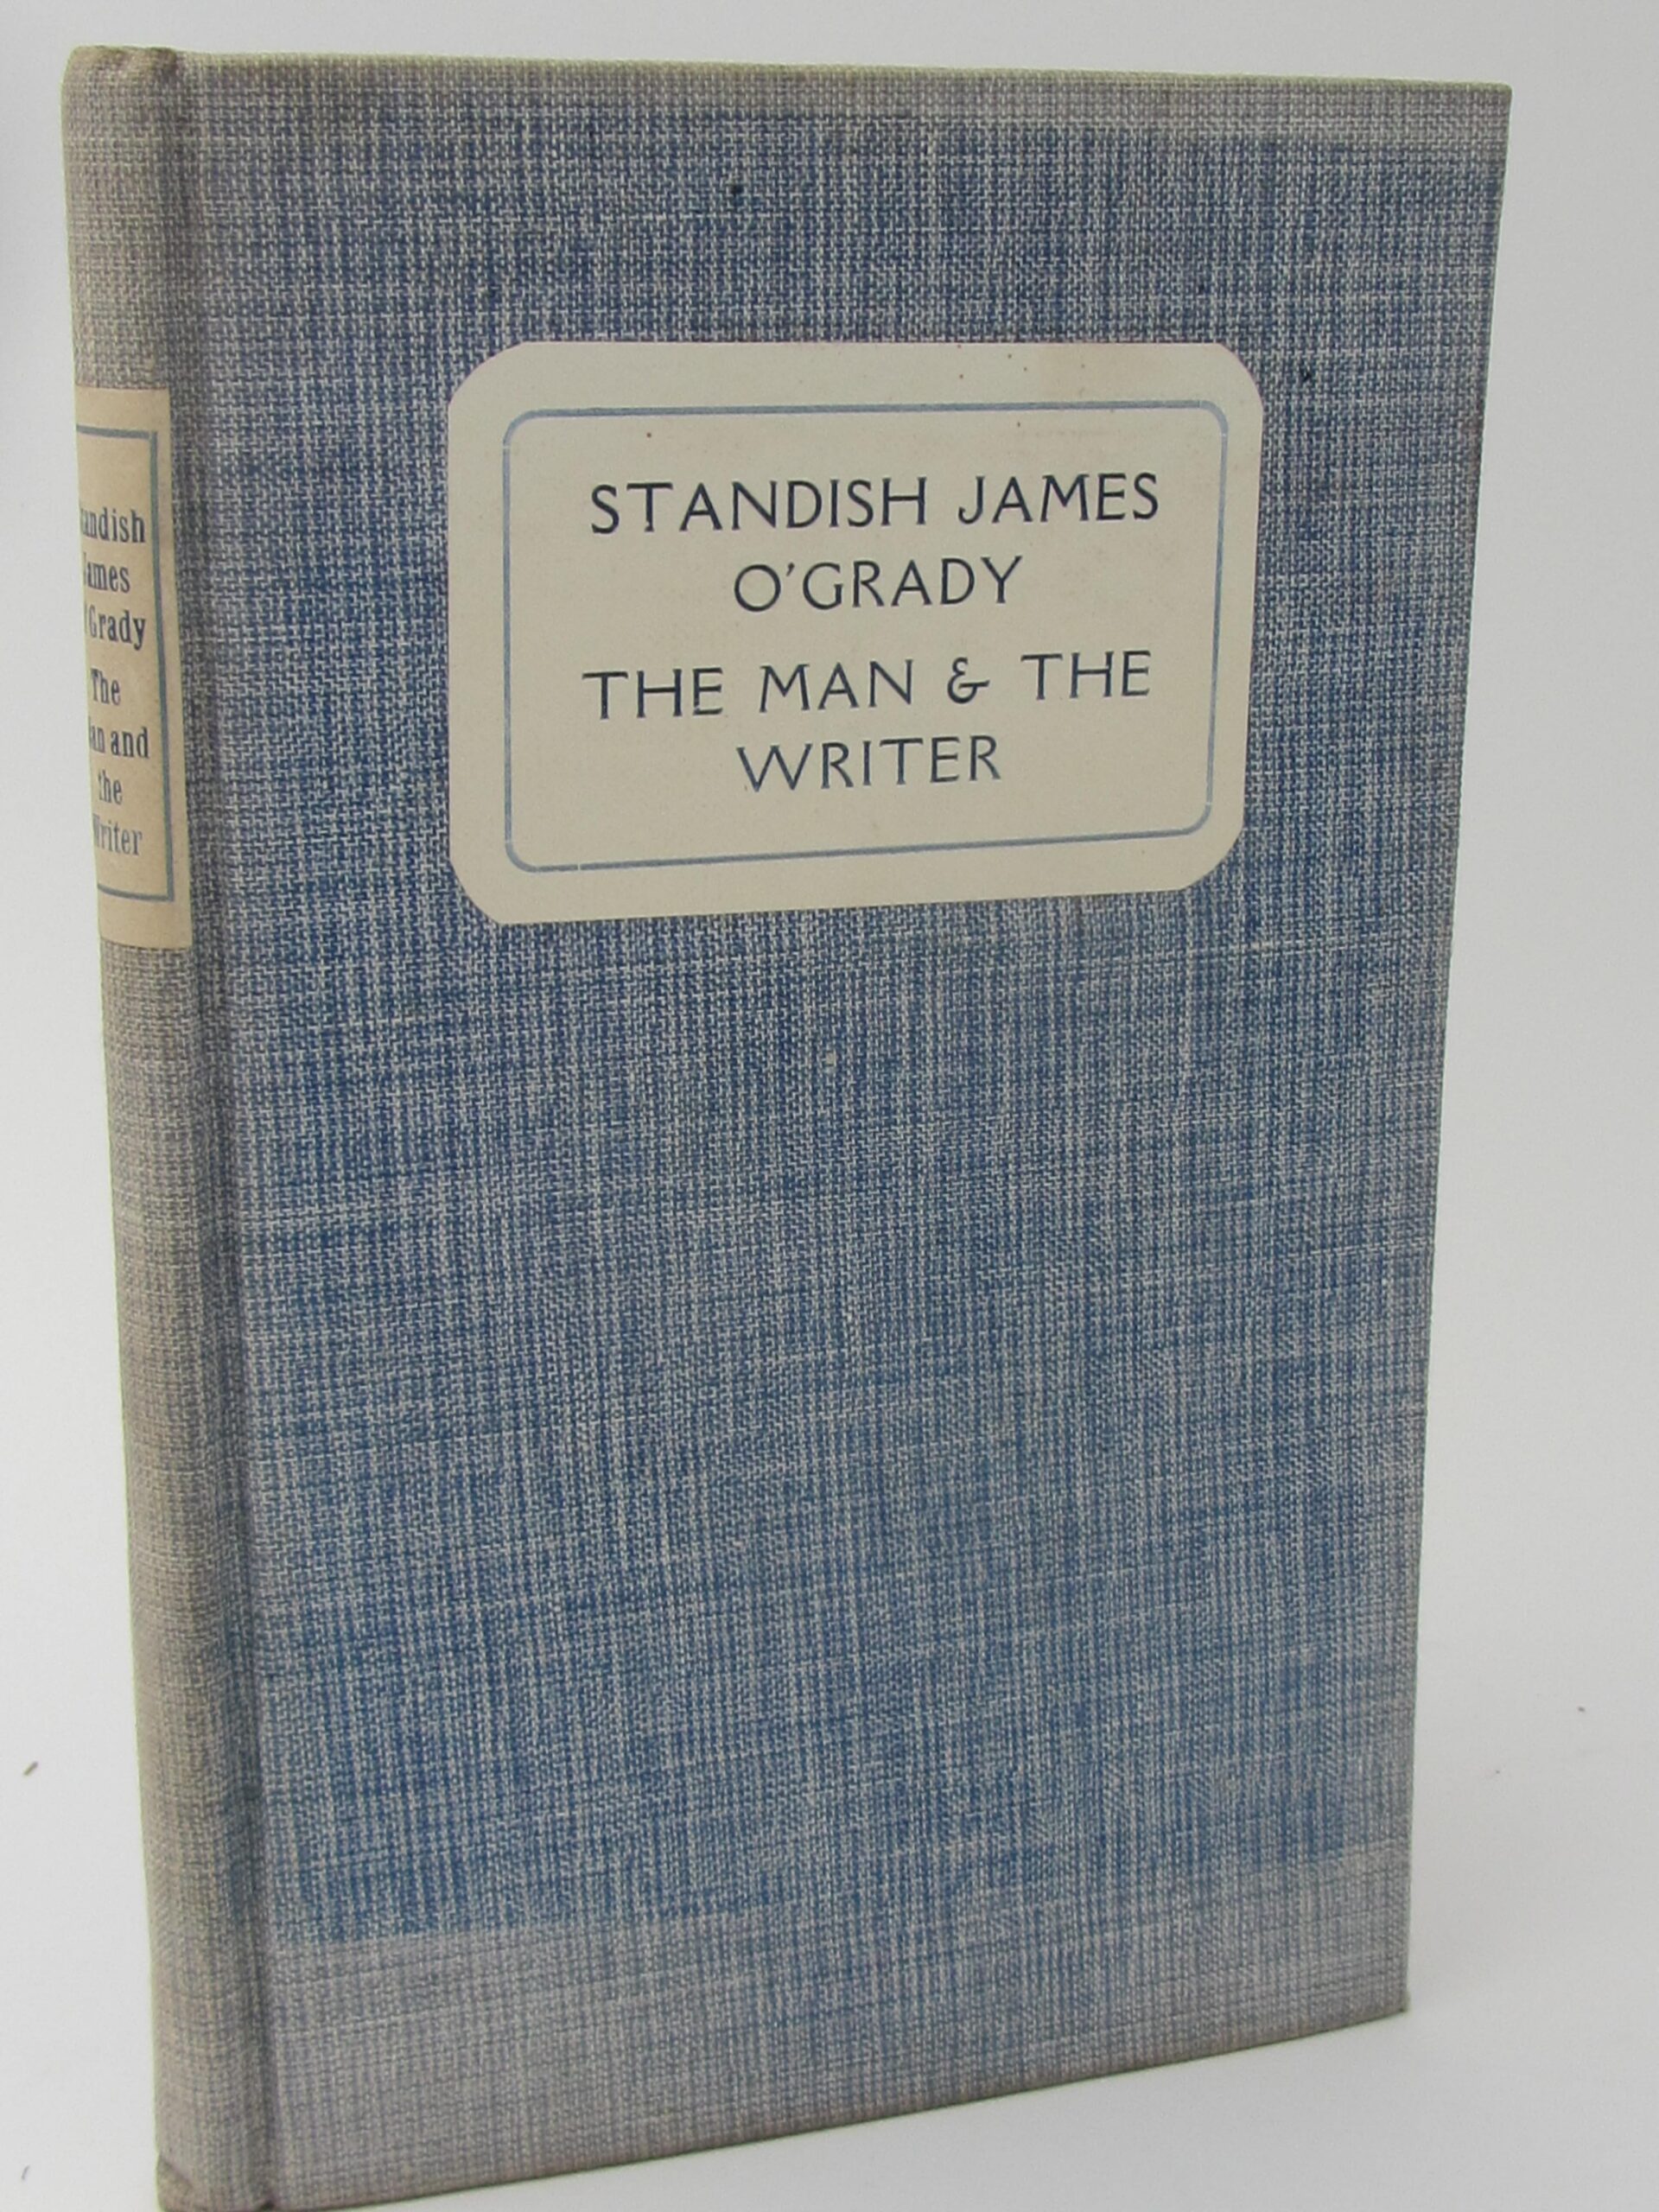 Standish James O'Grady. The Man and The Writer (1929) by Hugh Art O'Grady